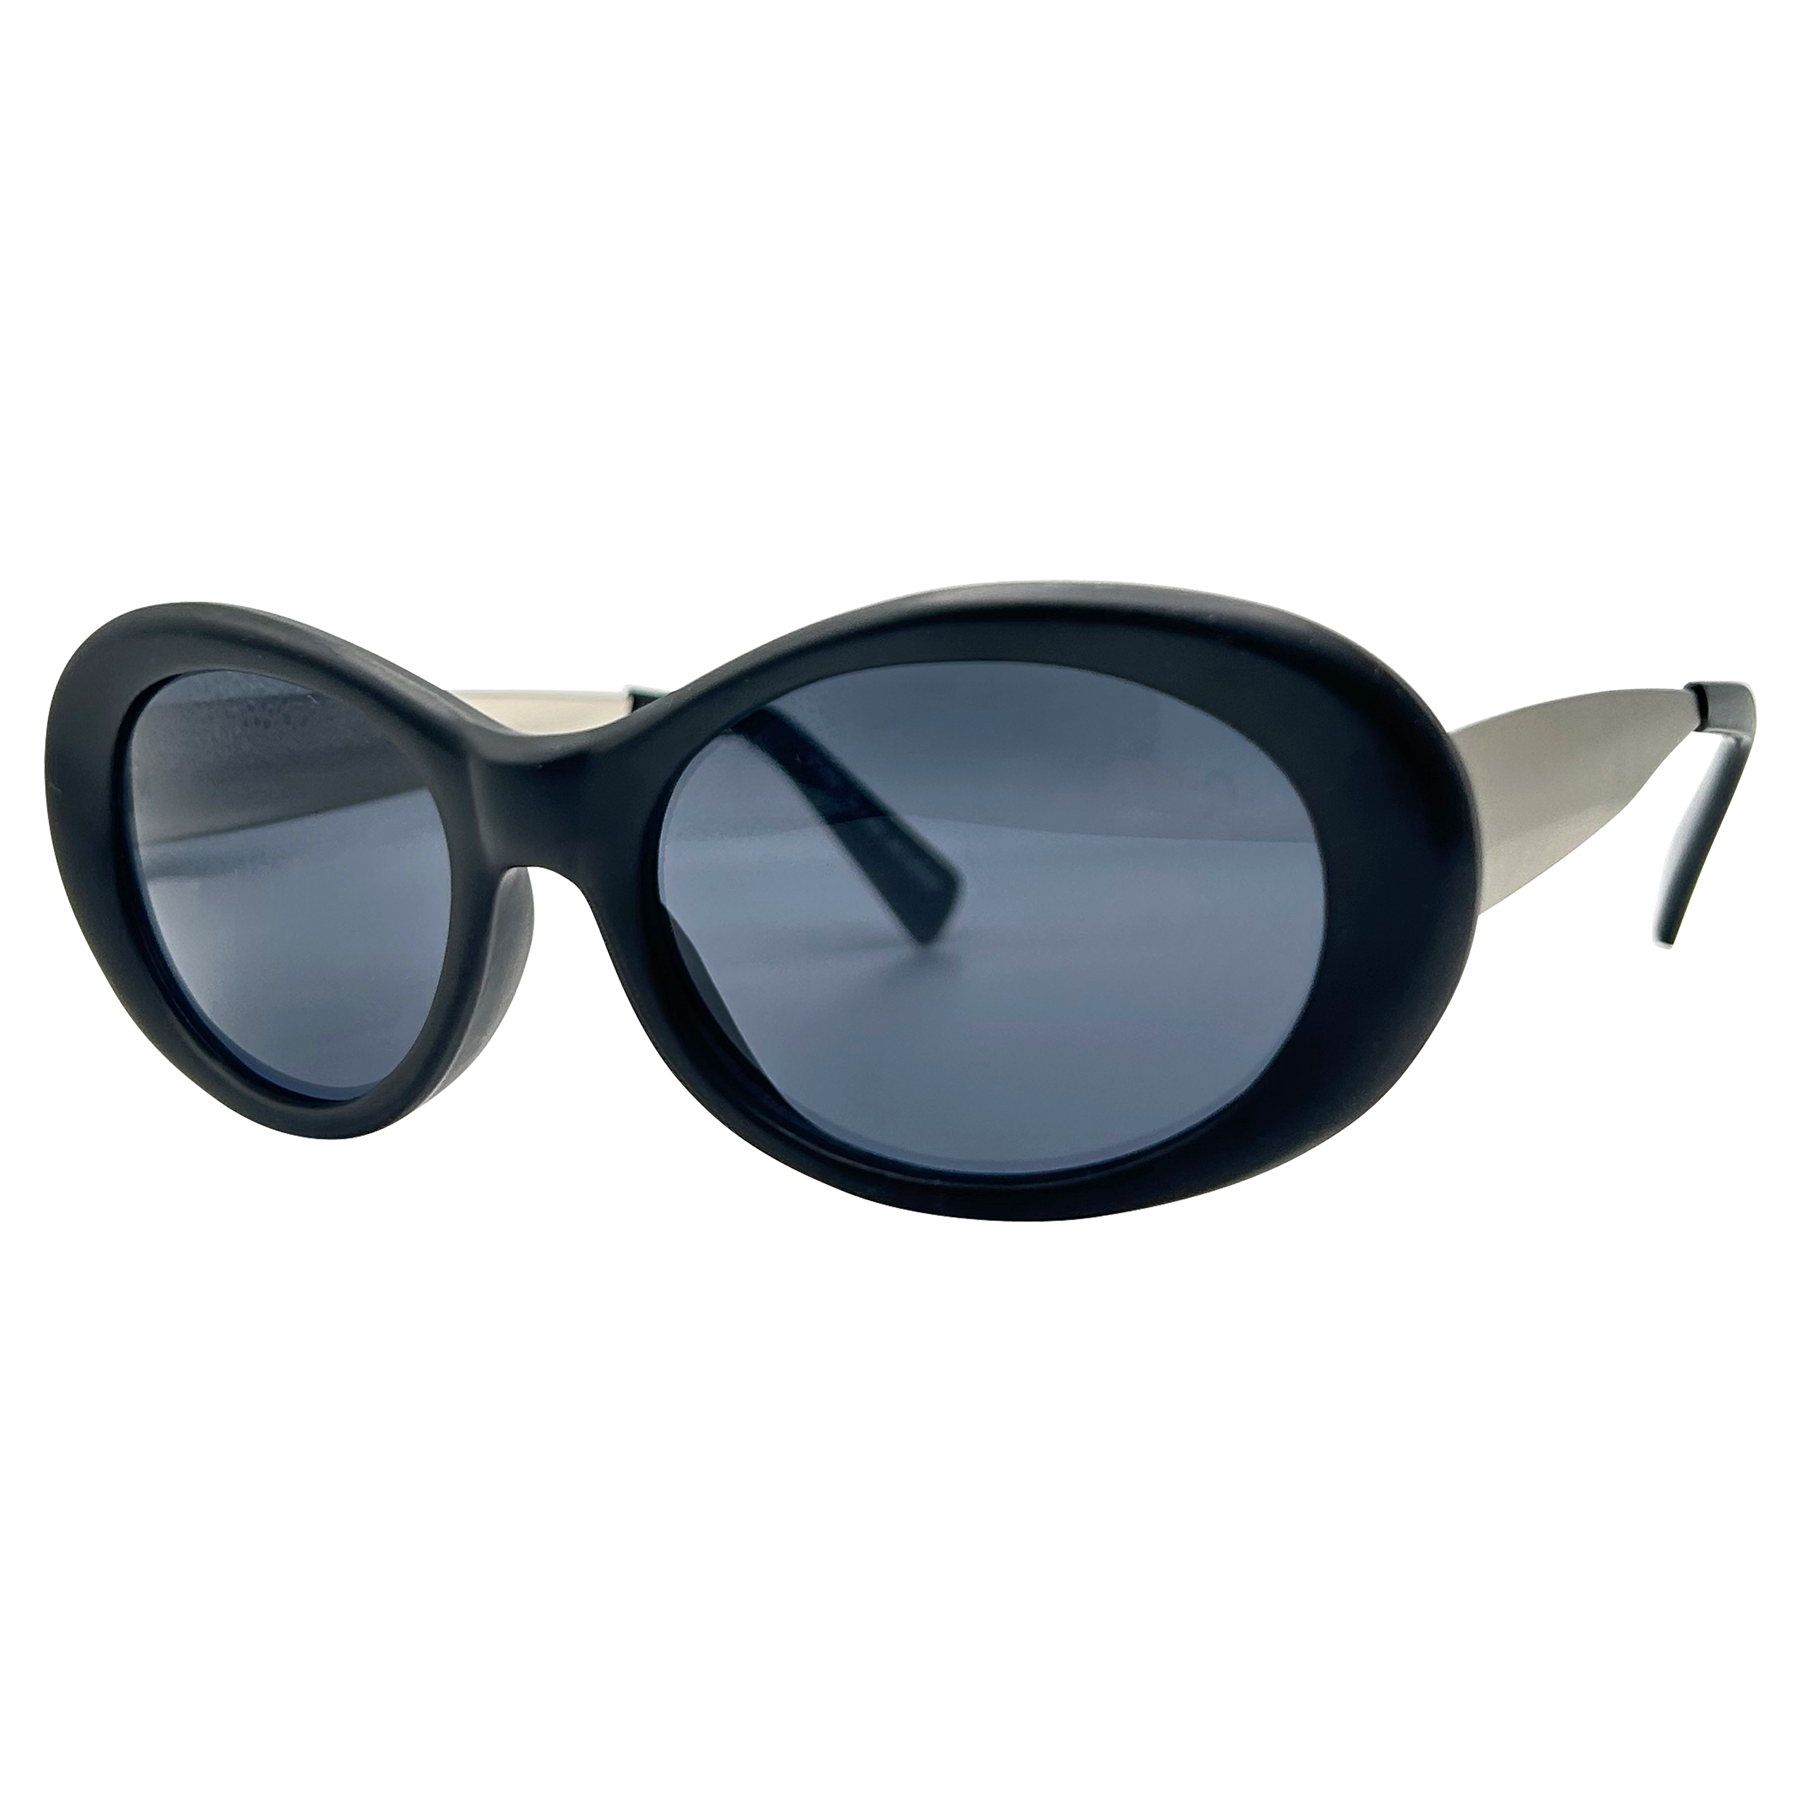 Shop YOUTH Black/Silver vintage oval sunglasses